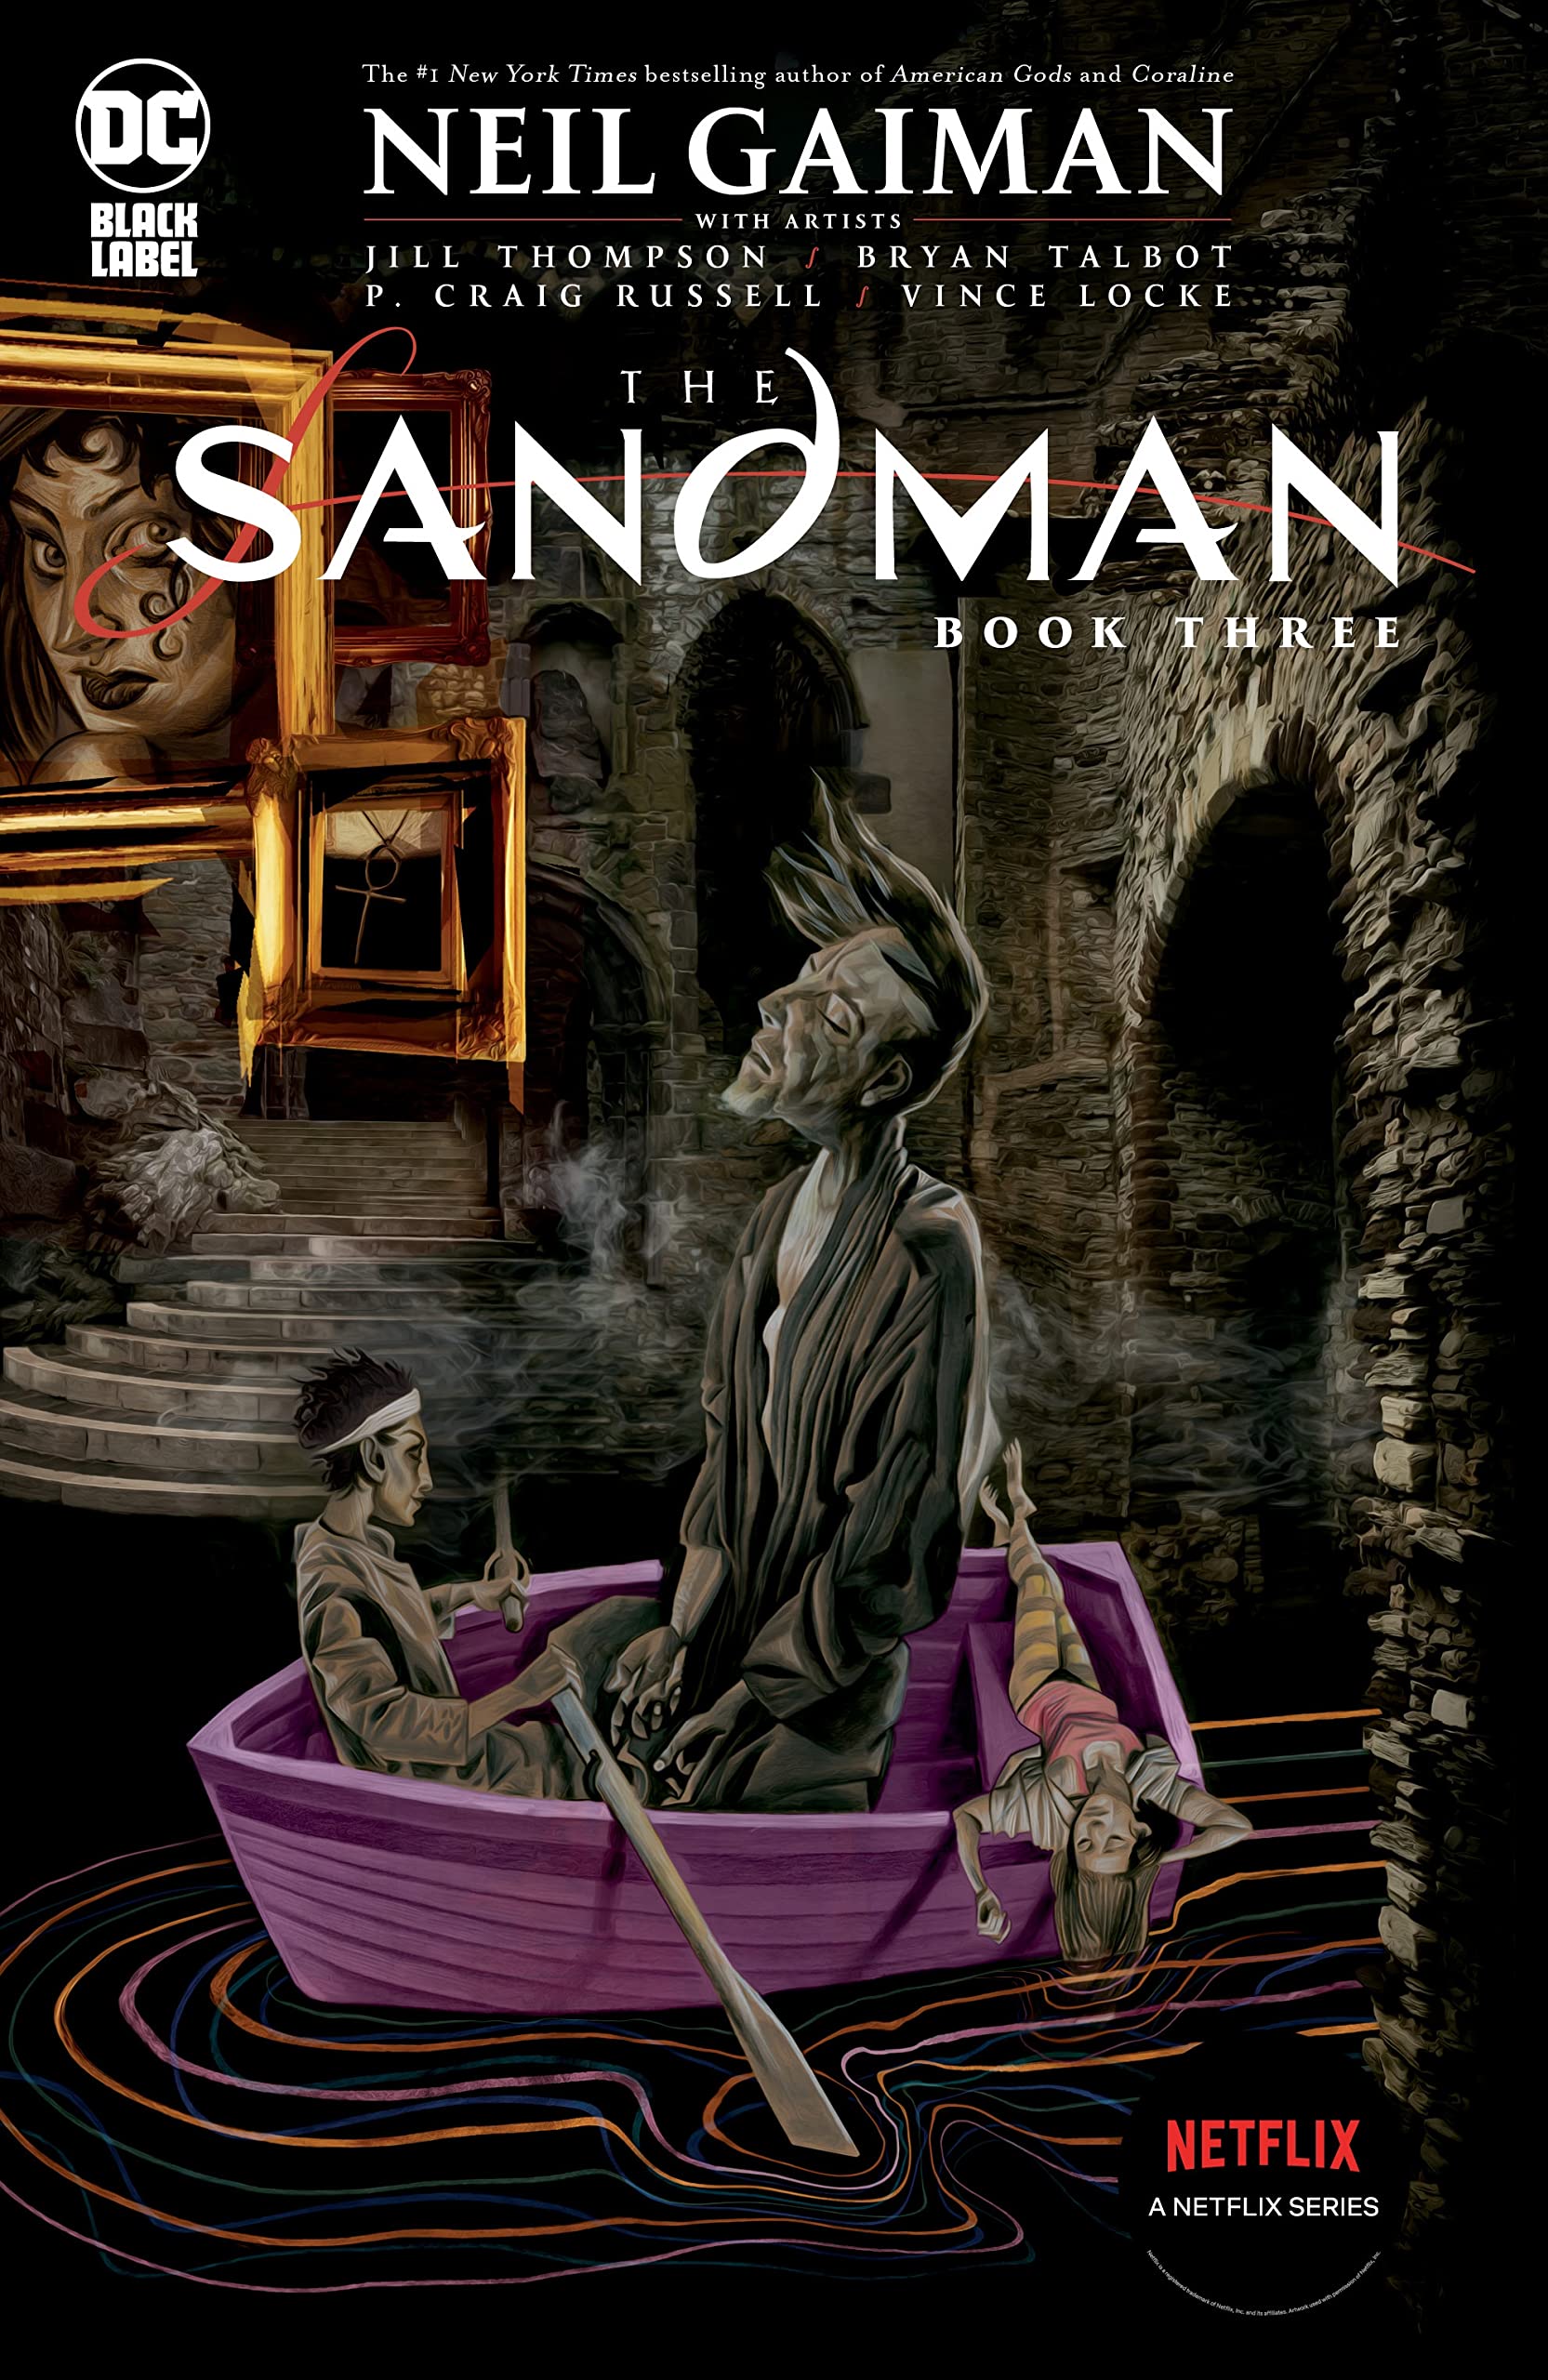 The Sandman: Book Three by Neil Gaiman